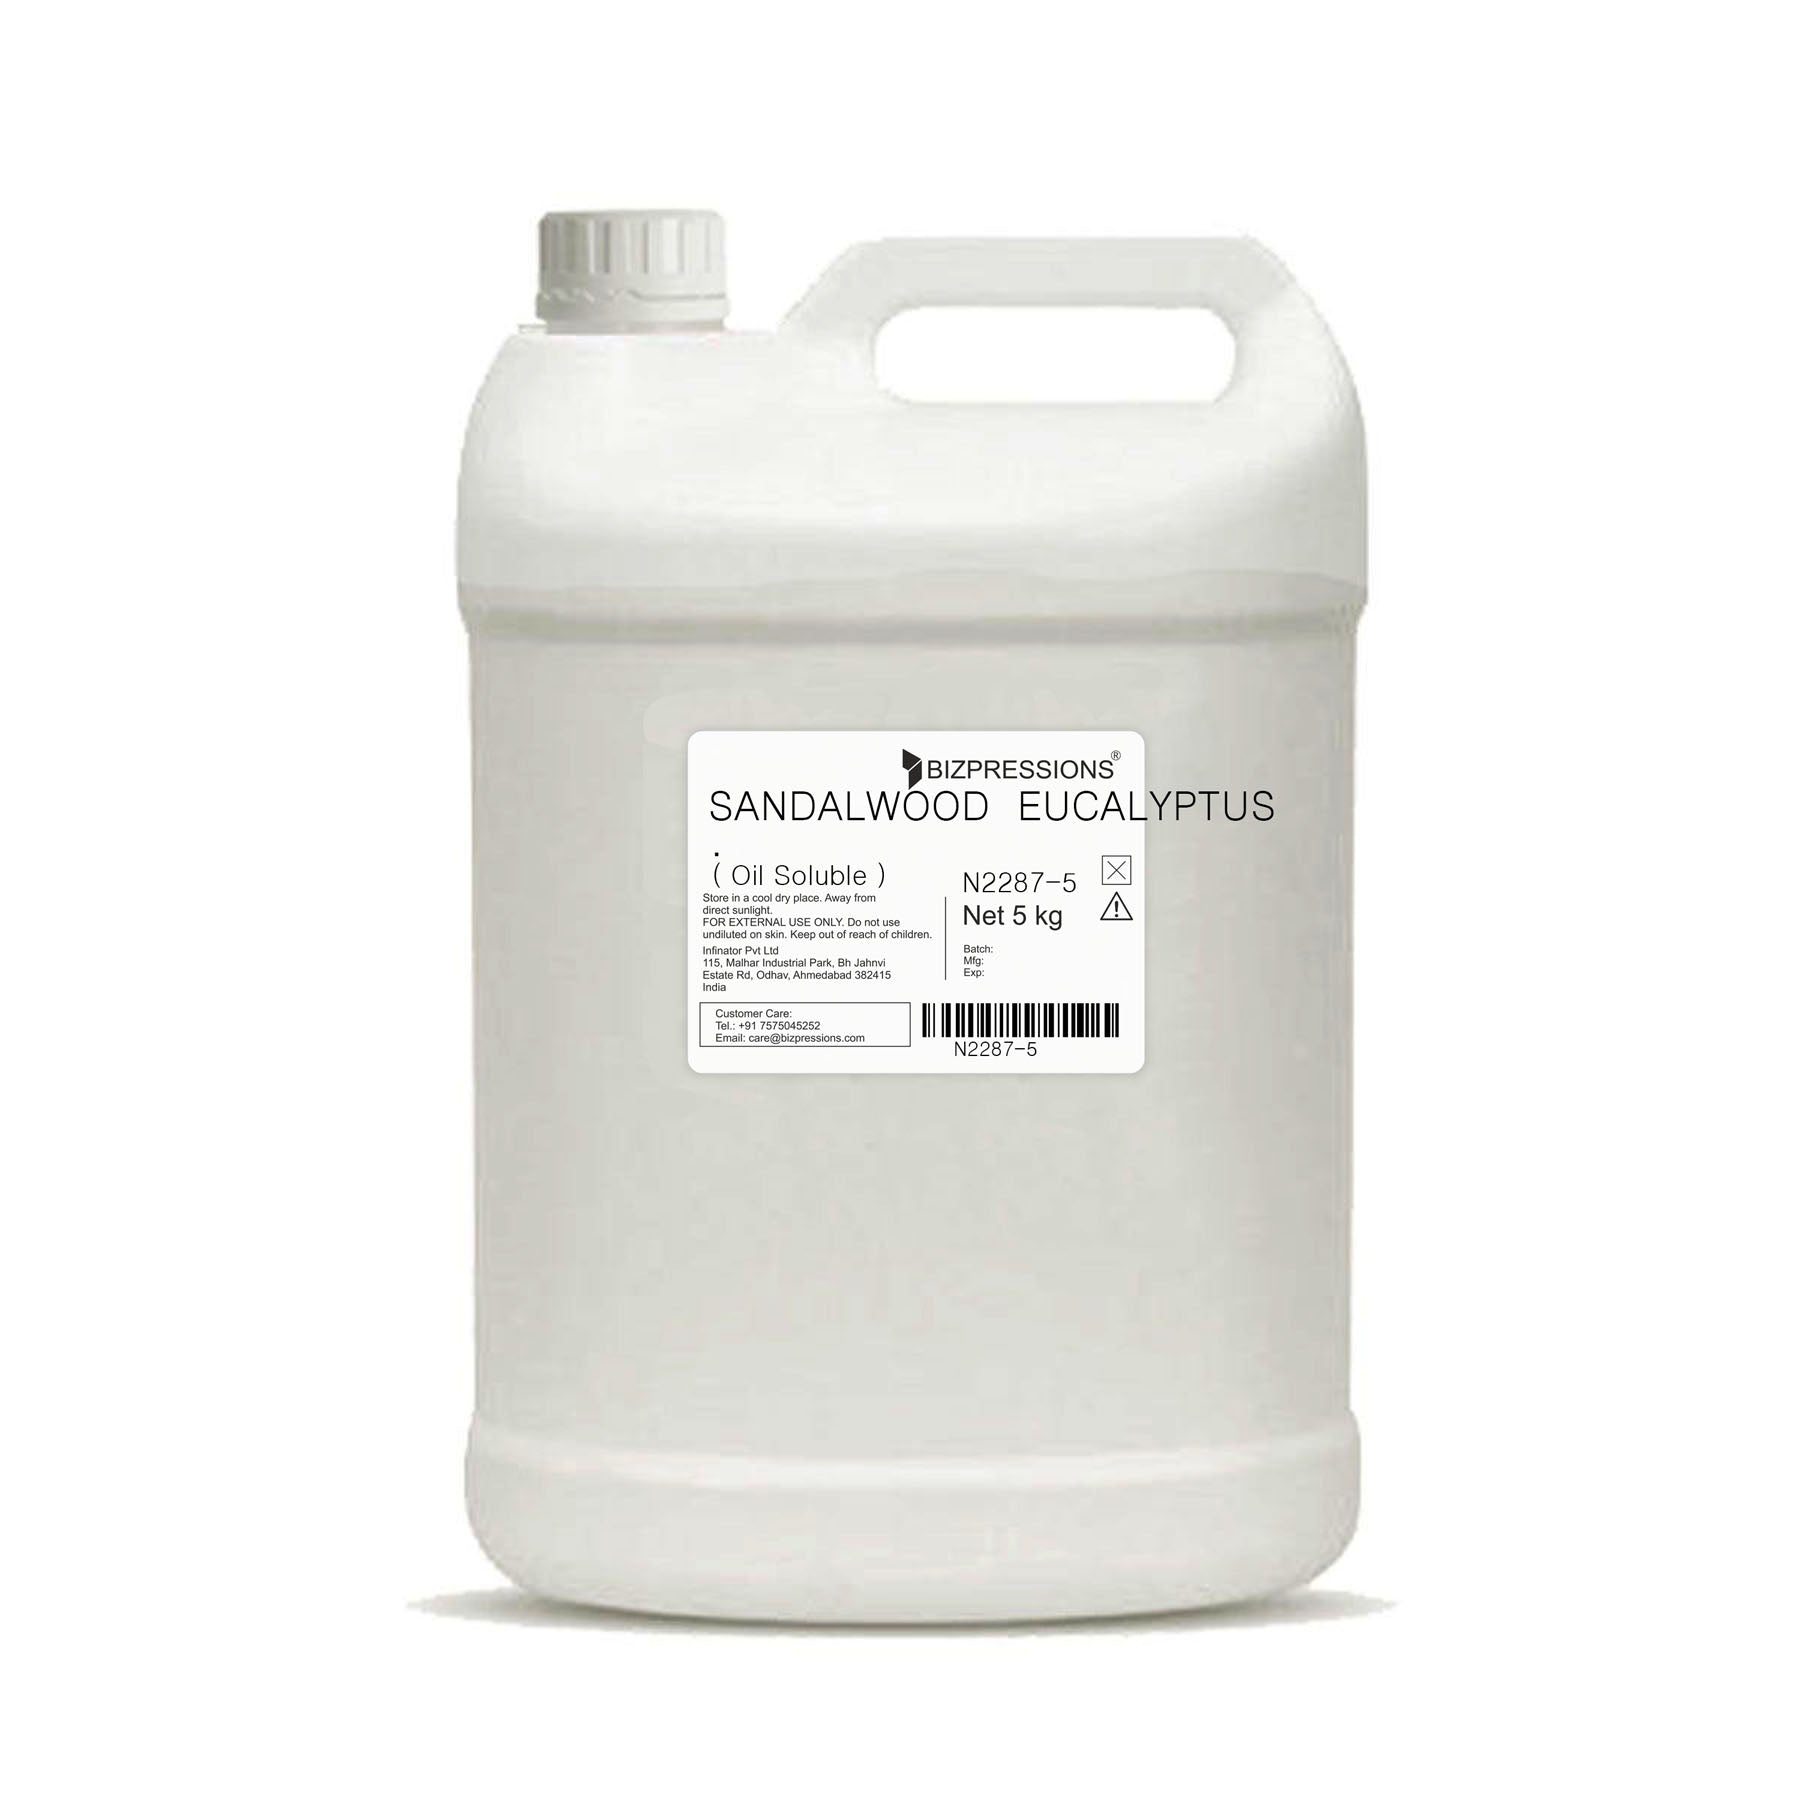 SANDALWOOD EUCALYPTUS - Fragrance ( Oil Soluble ) - 5 kg